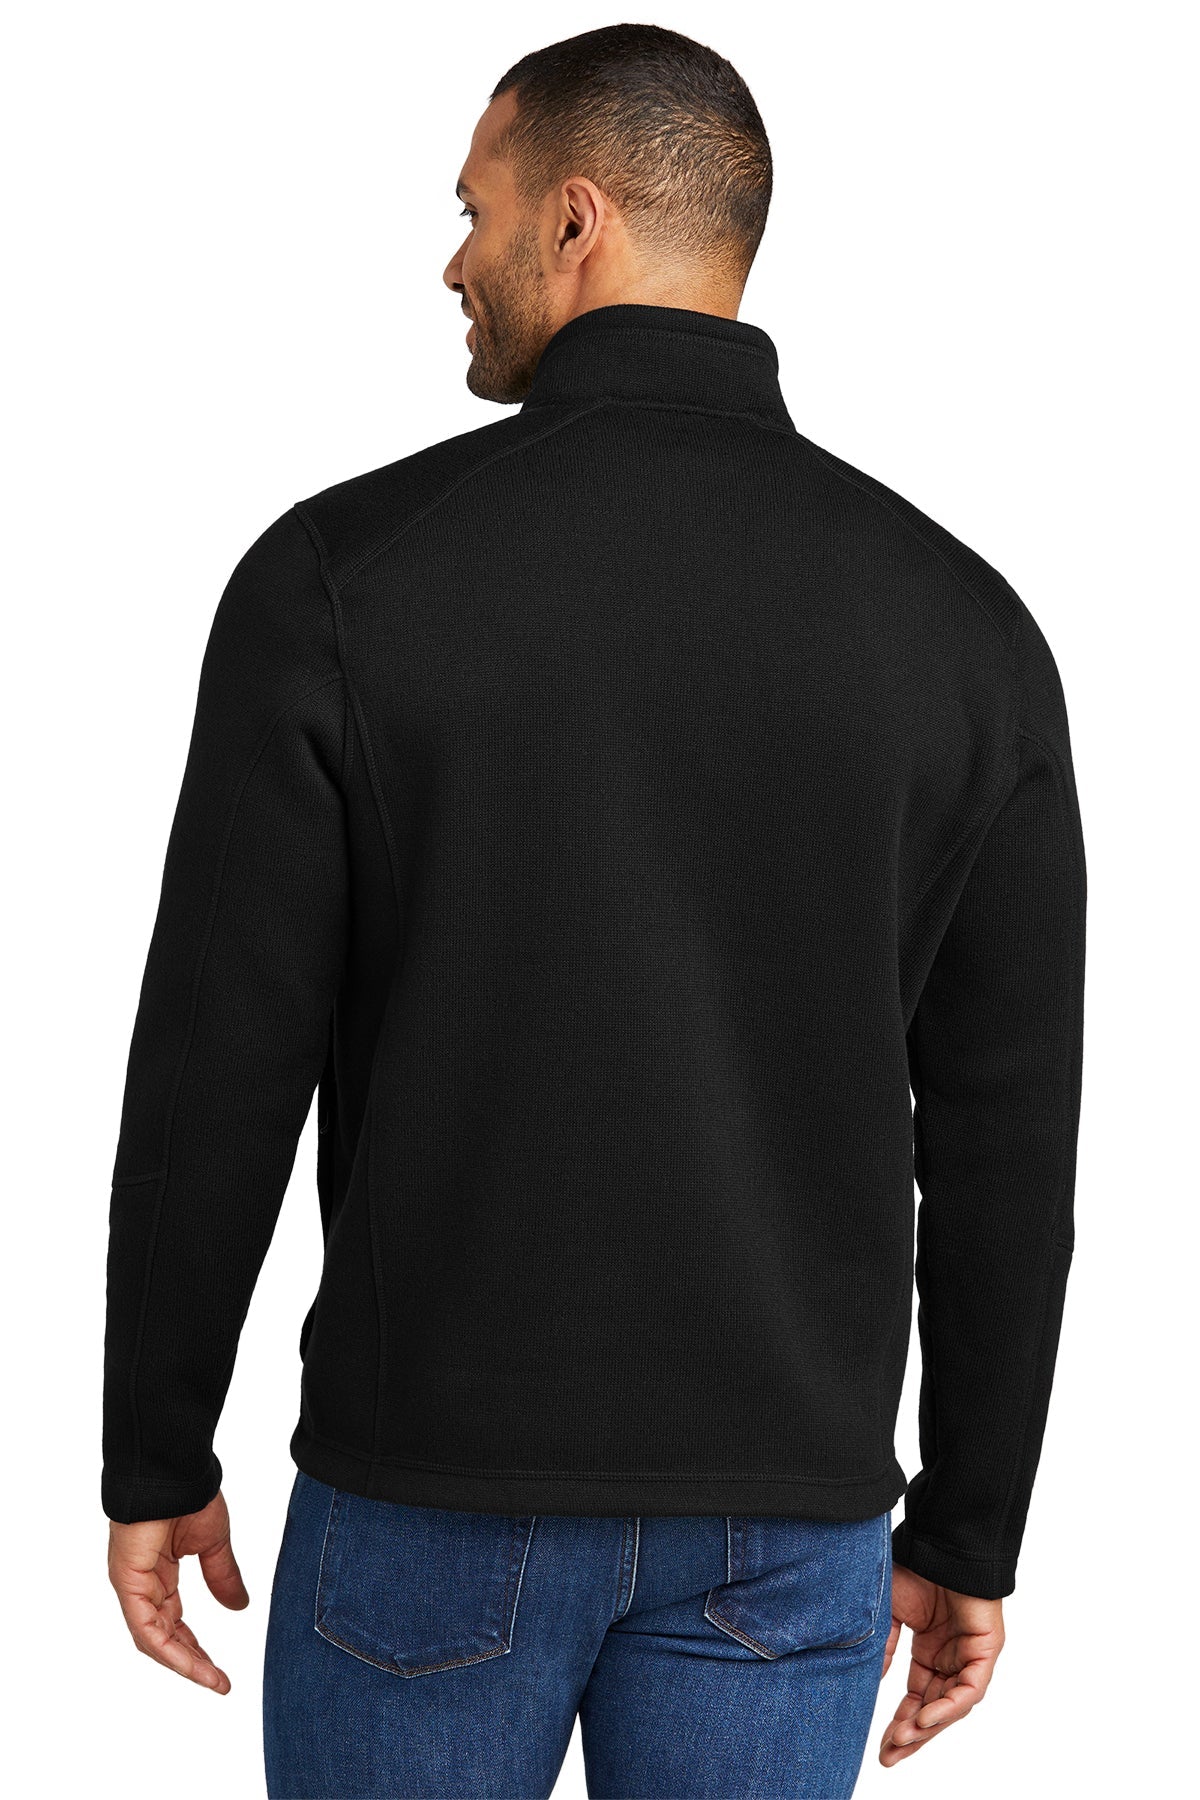 Port Authority Arc Sweater Fleece Customized 1/4-Zips, Deep Black